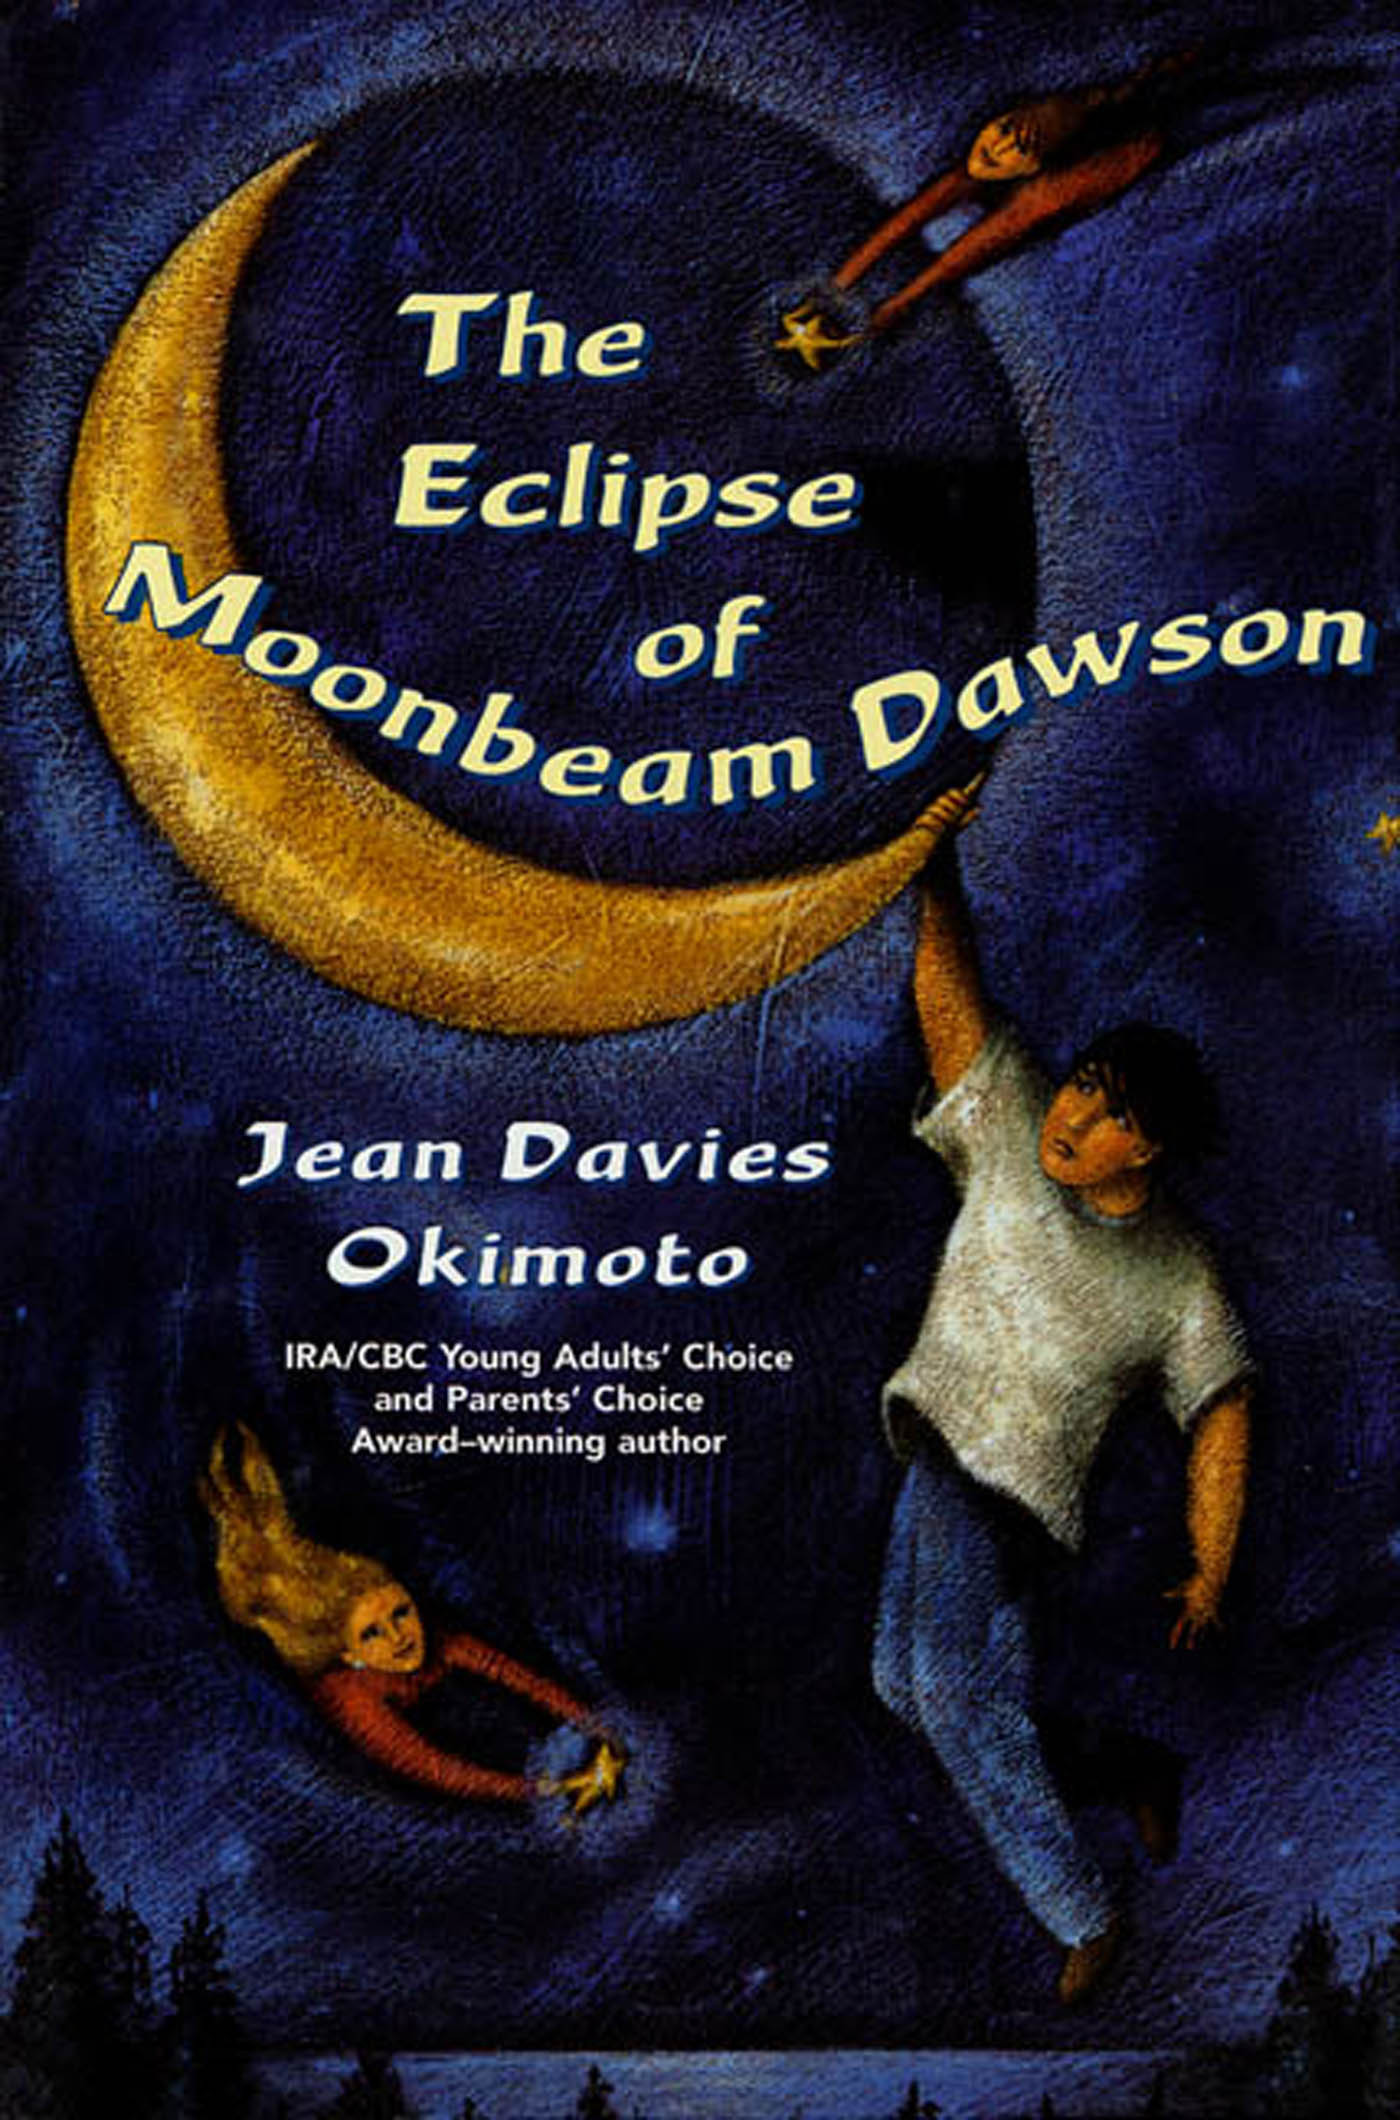 The Eclipse of Moonbeam Dawson by Jean Davies Okimoto